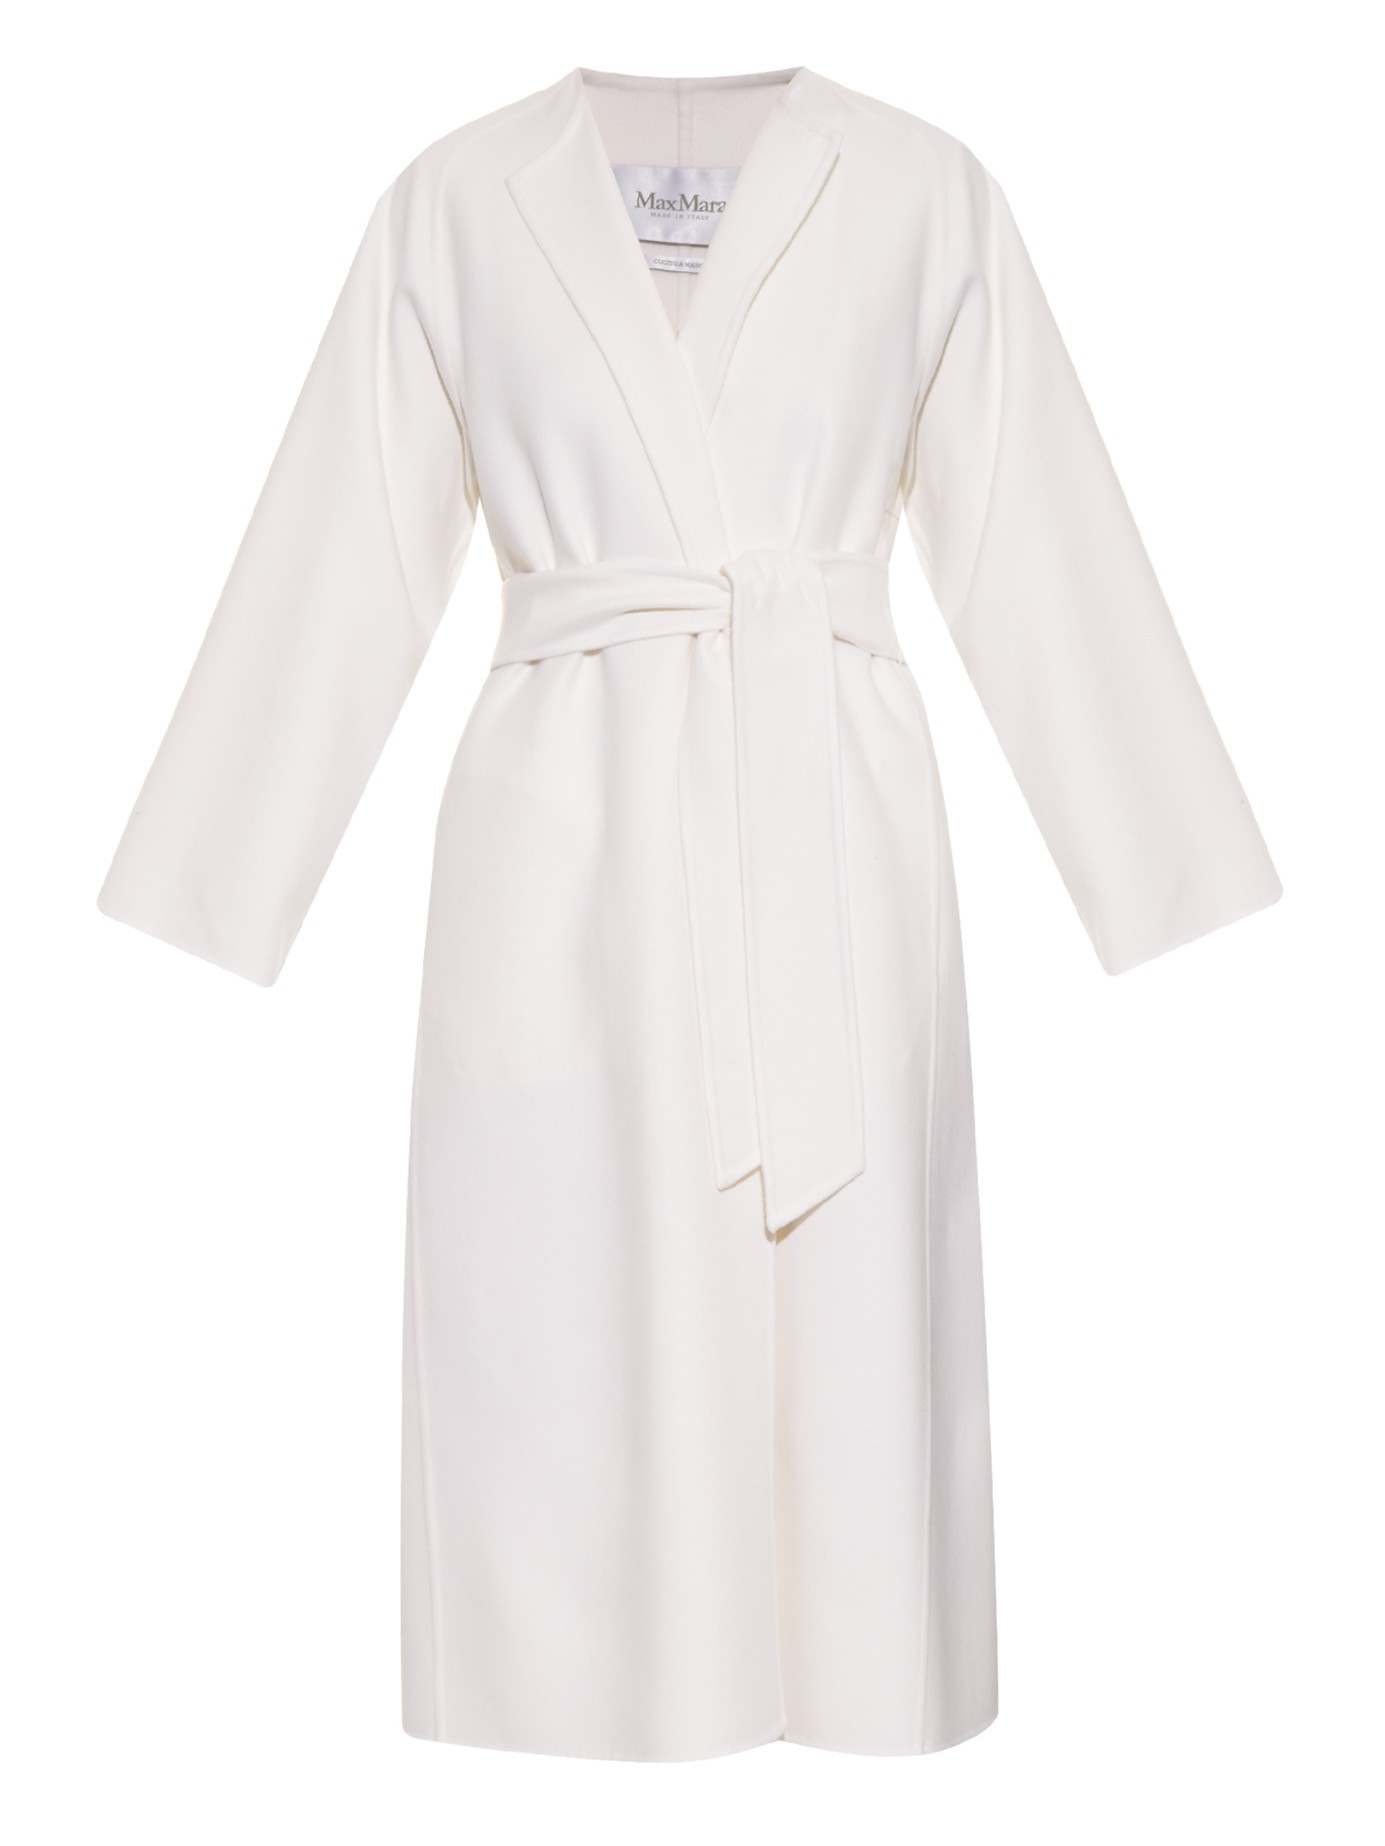 Max Mara Wool Emma Coat in White - Lyst